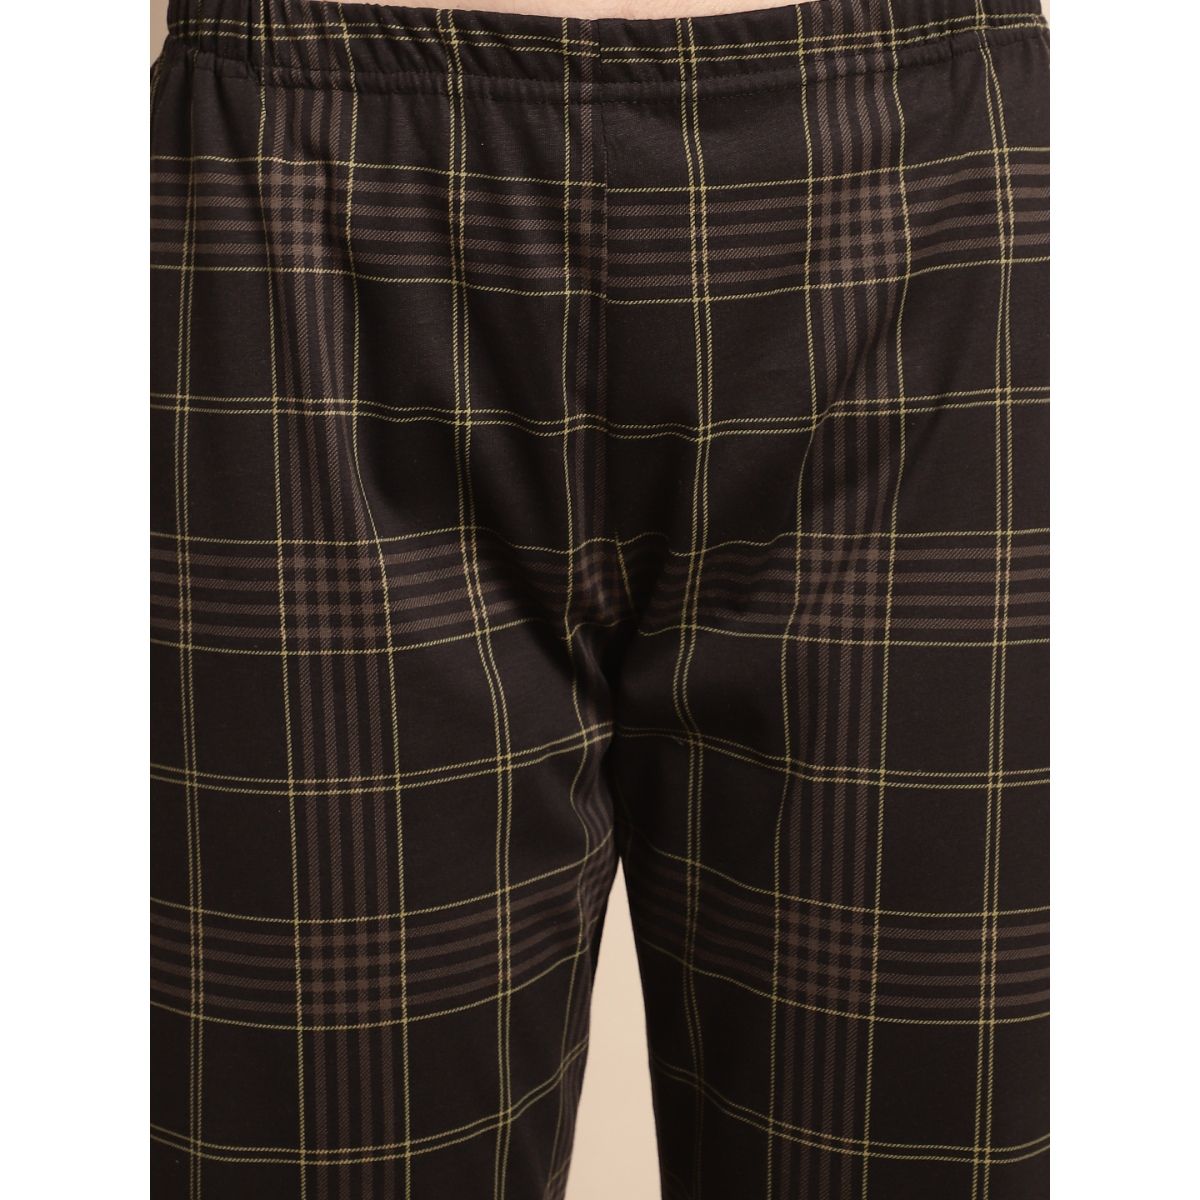 MENS PYJAMA BOTTOMS Rich Cotton Woven Check Lounge Pant Nightwear Big 3XL  to 5XL £8.95 - PicClick UK